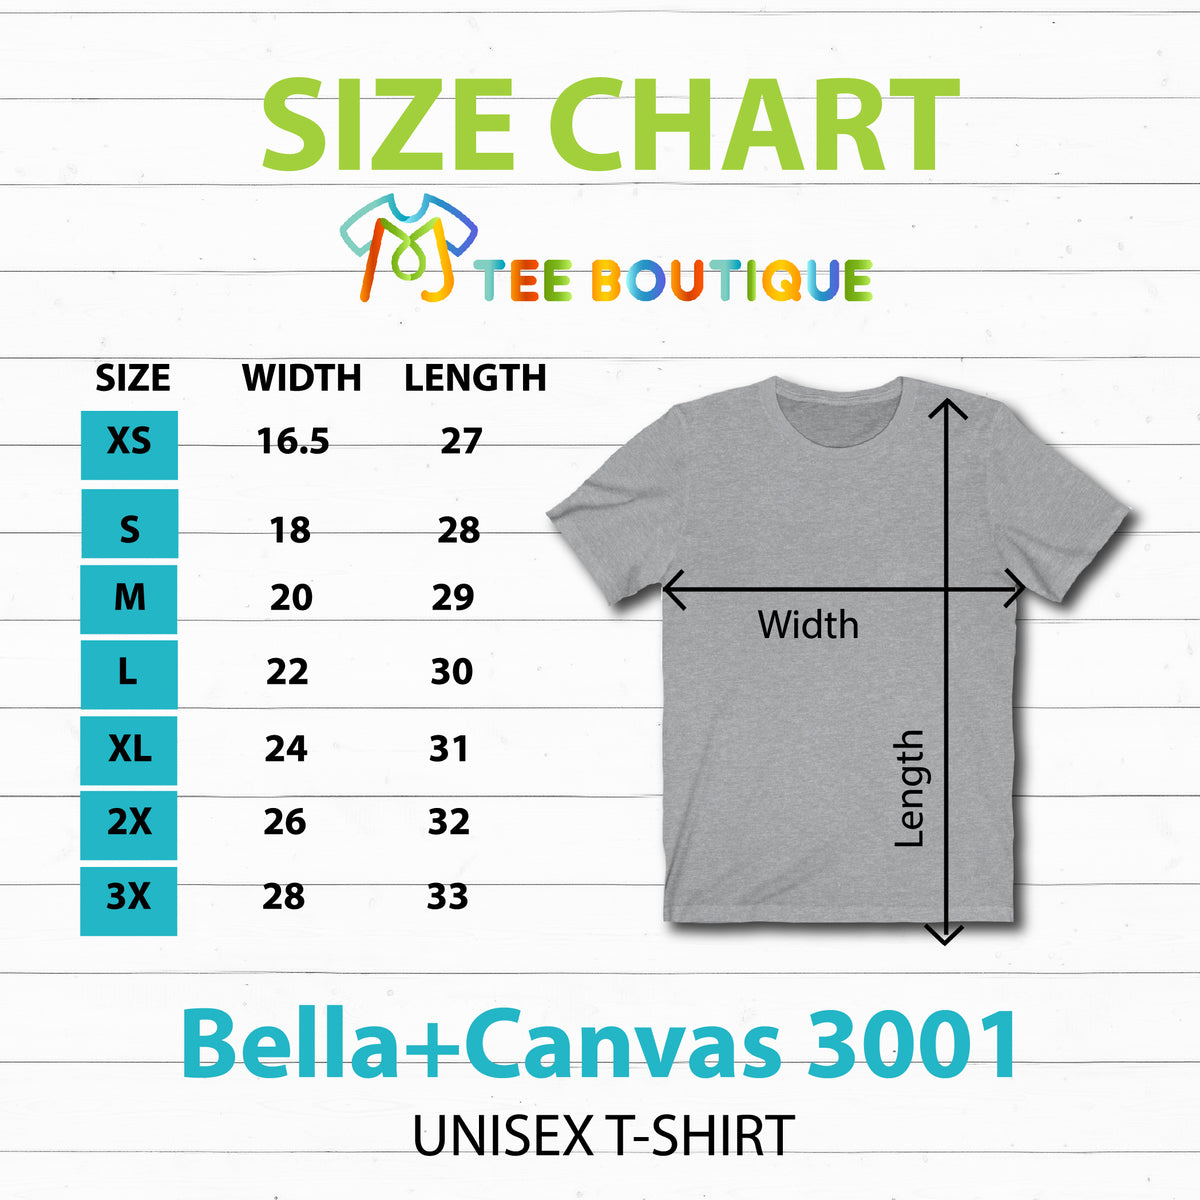 California Bear Surf Shirt | California Beach Bum Shirt | Retro Shirt | California Gifts | Unisex Jersey T-shirt